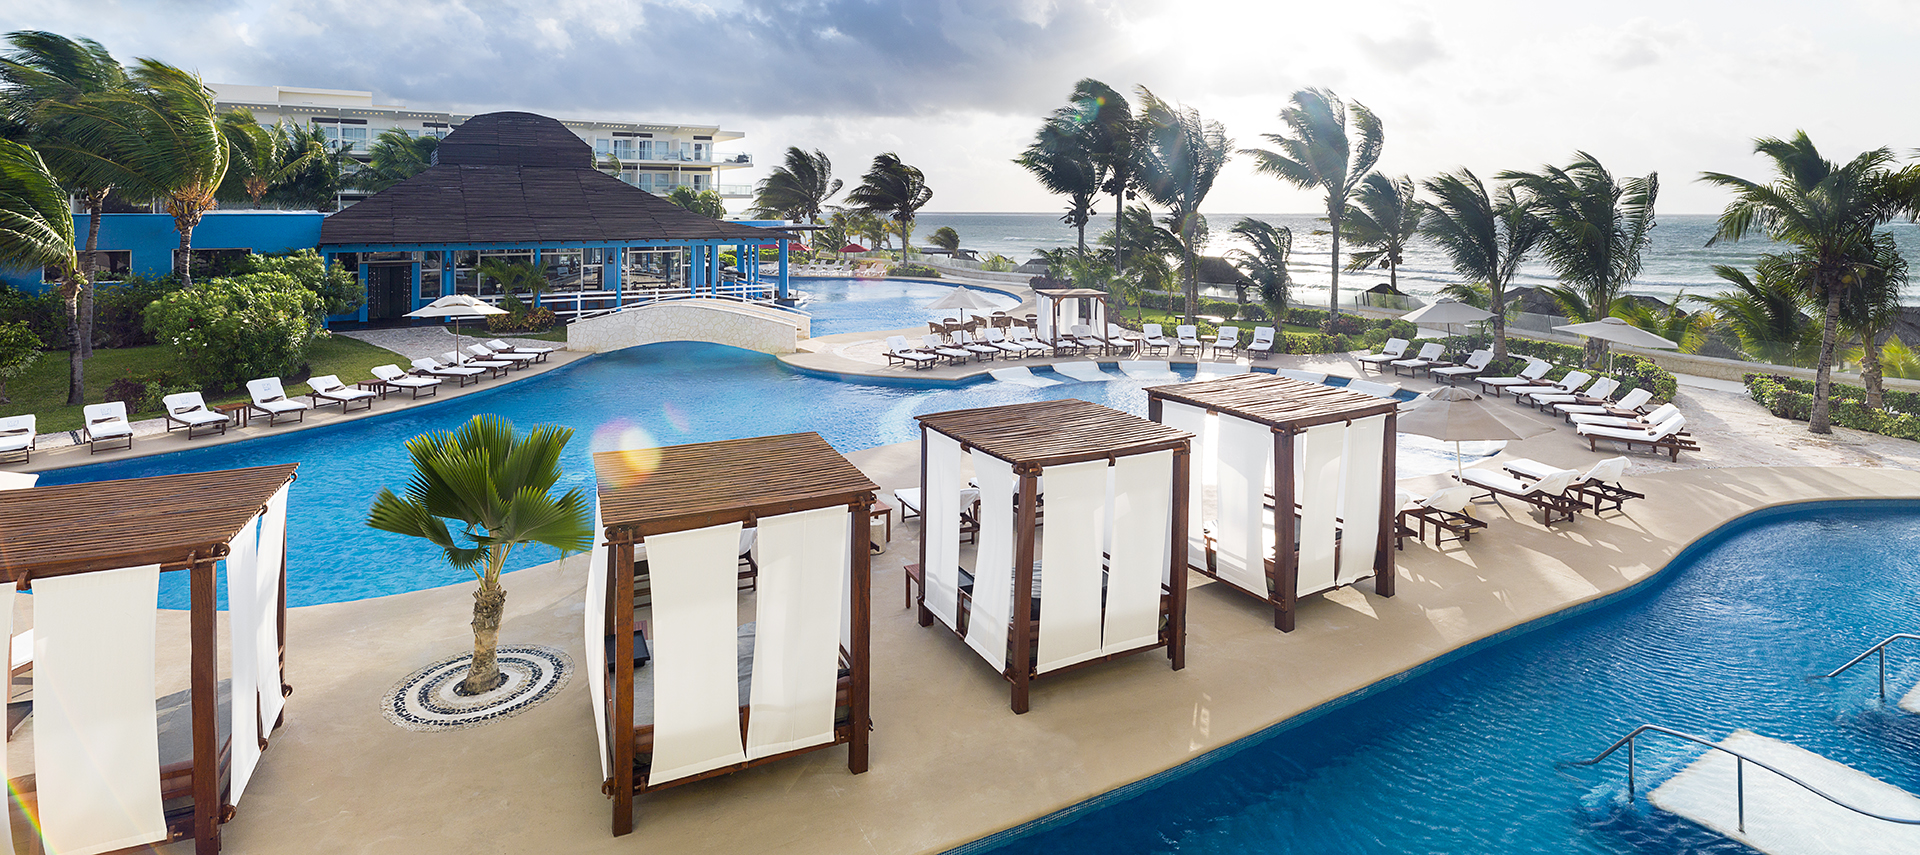 Cabanas surrounding pools at azul beach resort riviera cancun